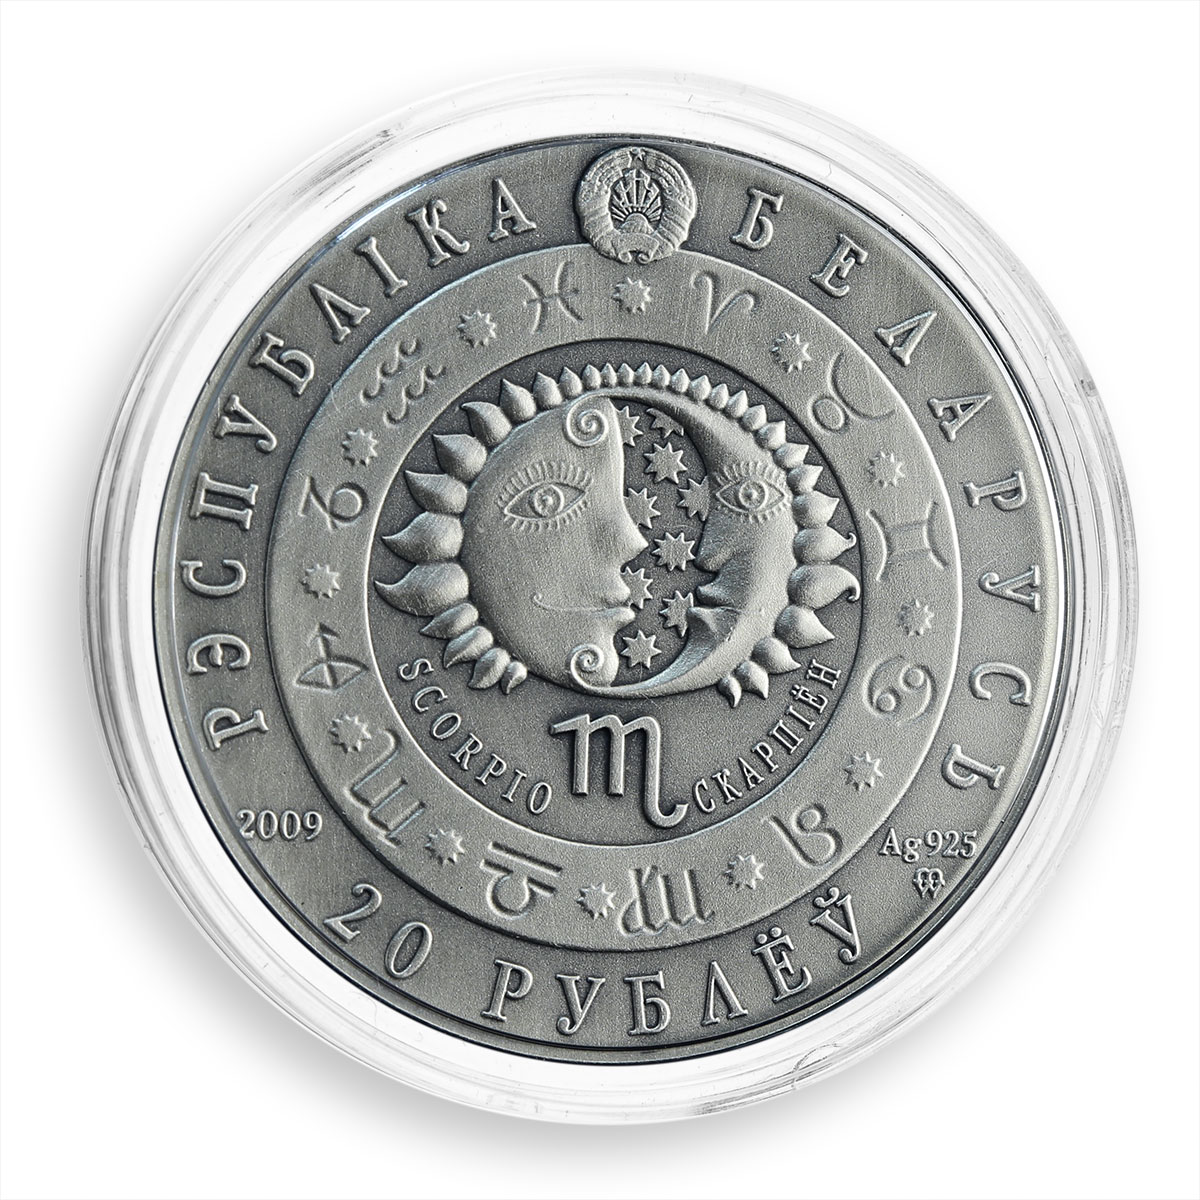 Belarus 20 rubles, Zodiac Signs, Scorpio, silver, zircons coin, 2009